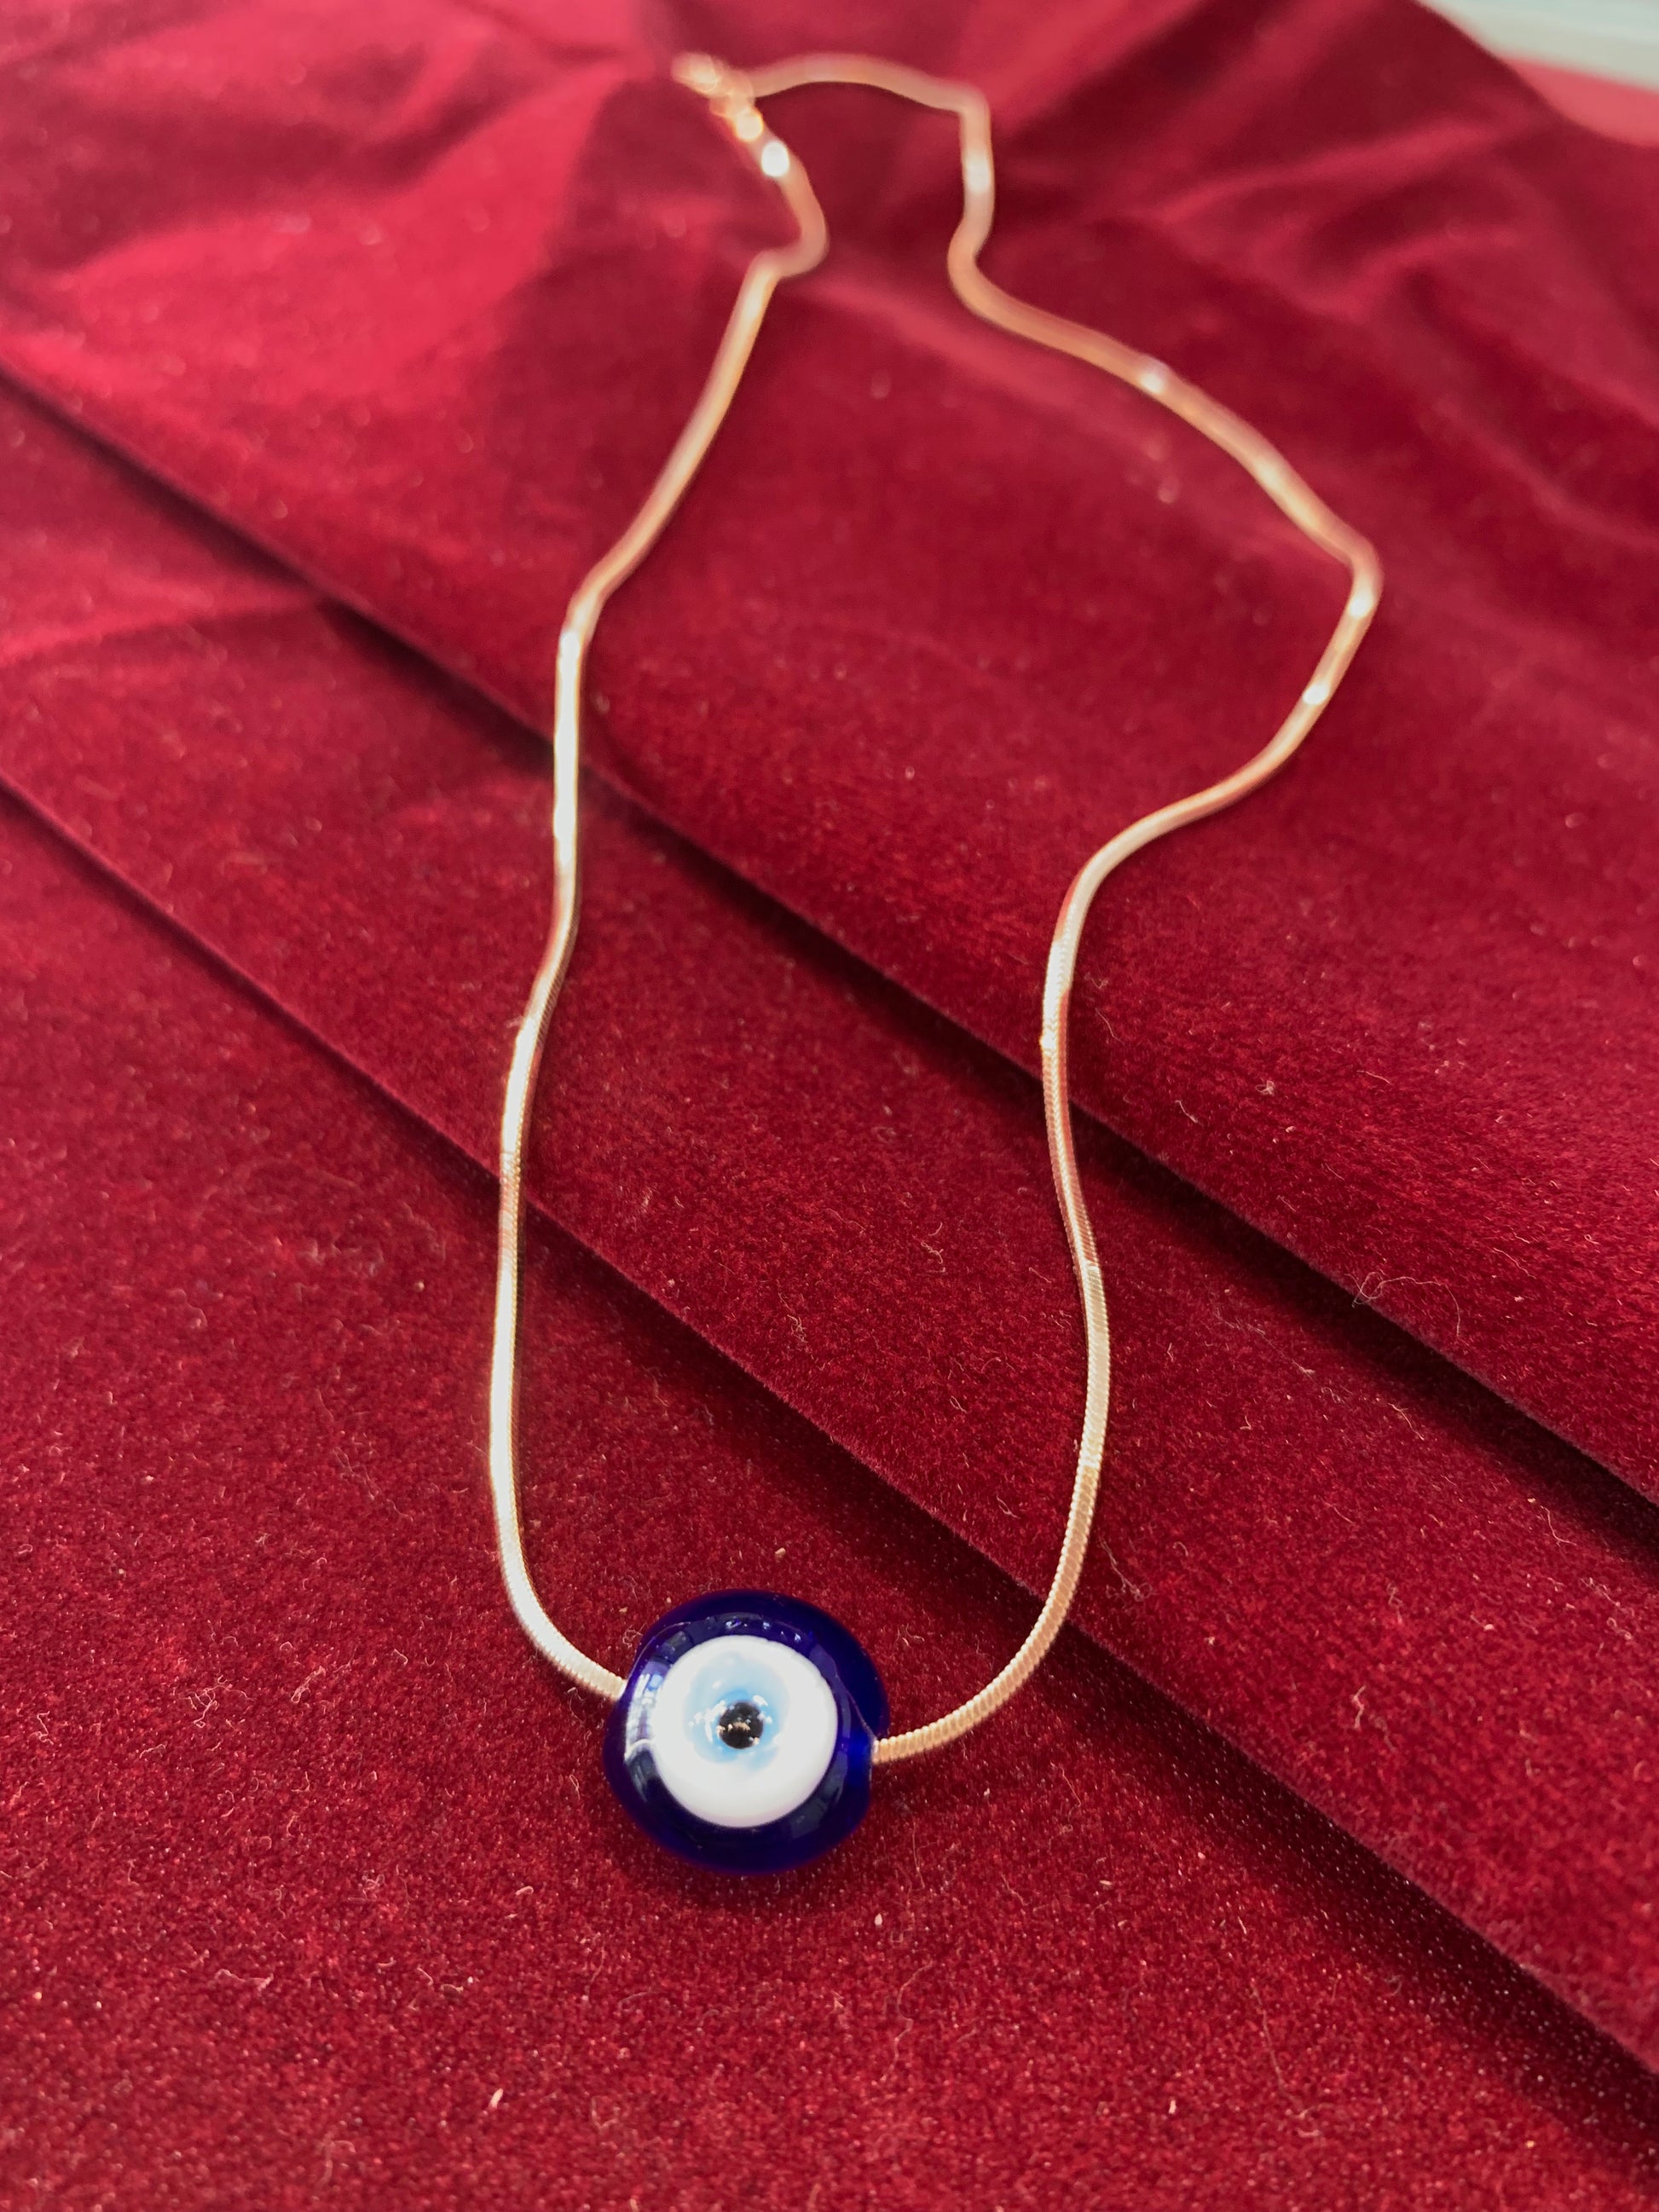 Stunning Evil Eye Necklace - Silver Jewelery 925